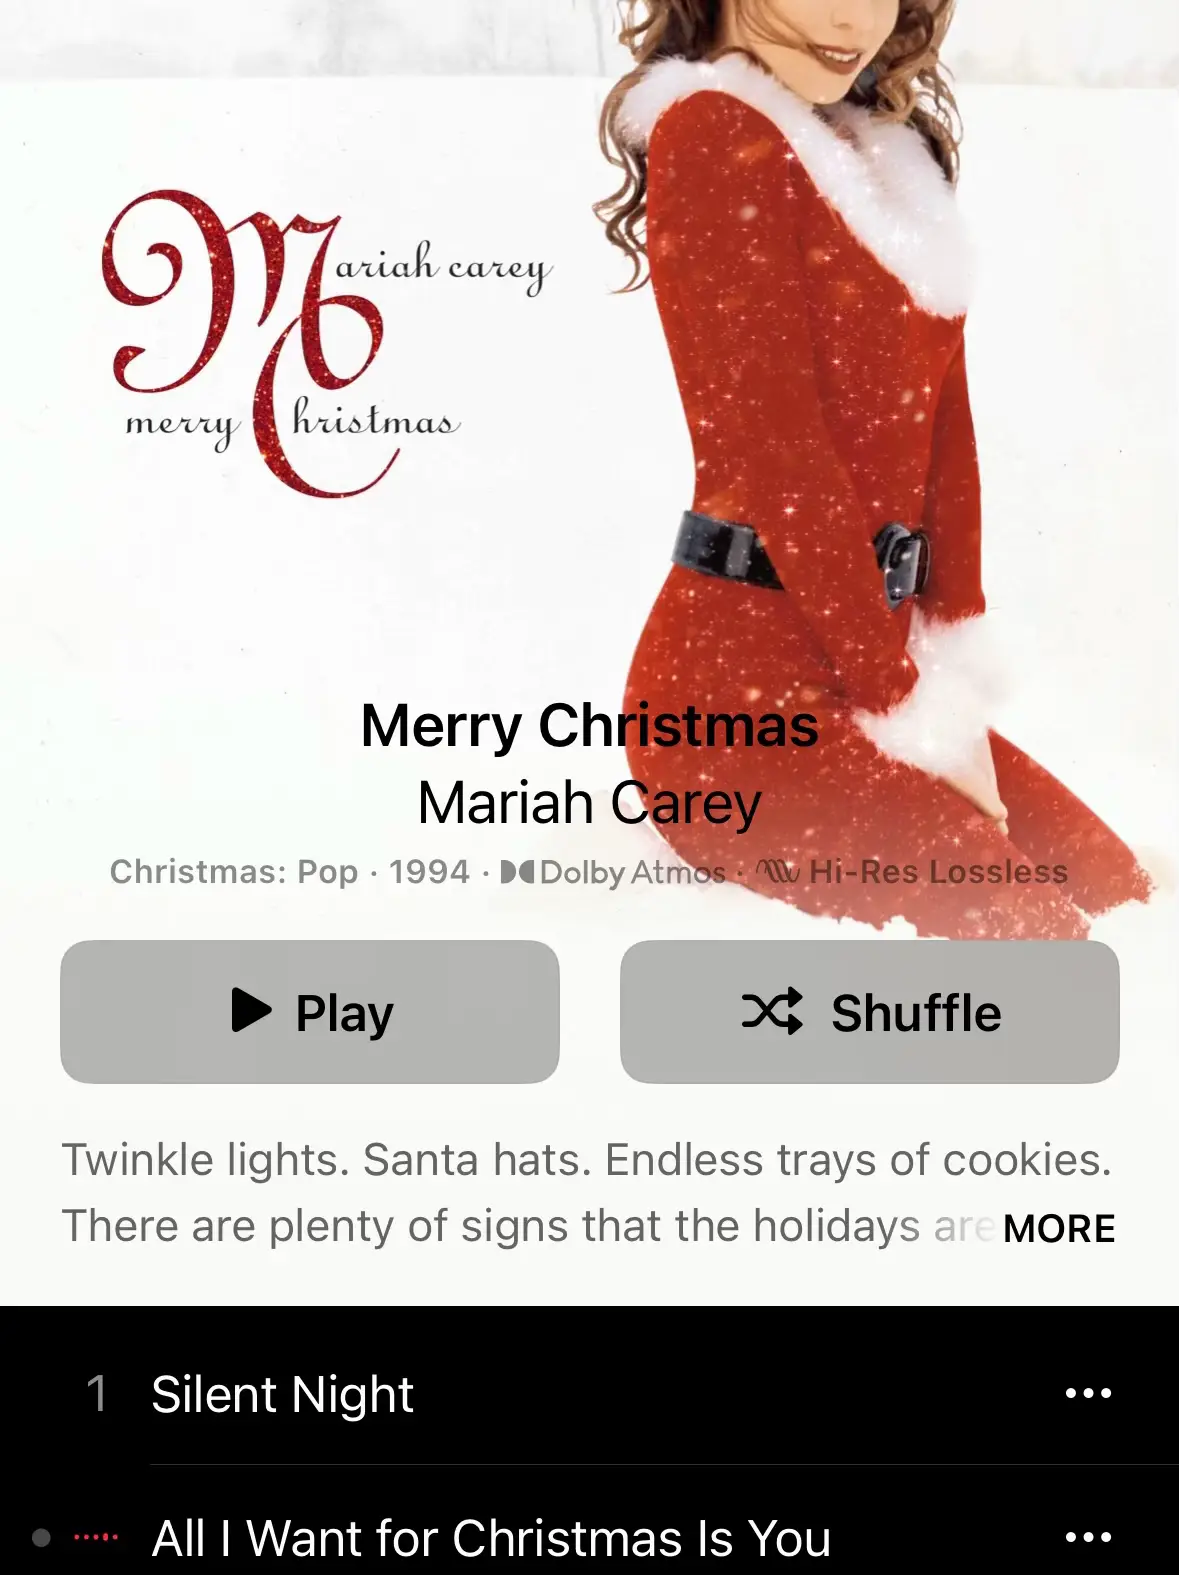 Hey Siri 🎧 play “All I want for Christmas” by Mariah Carey